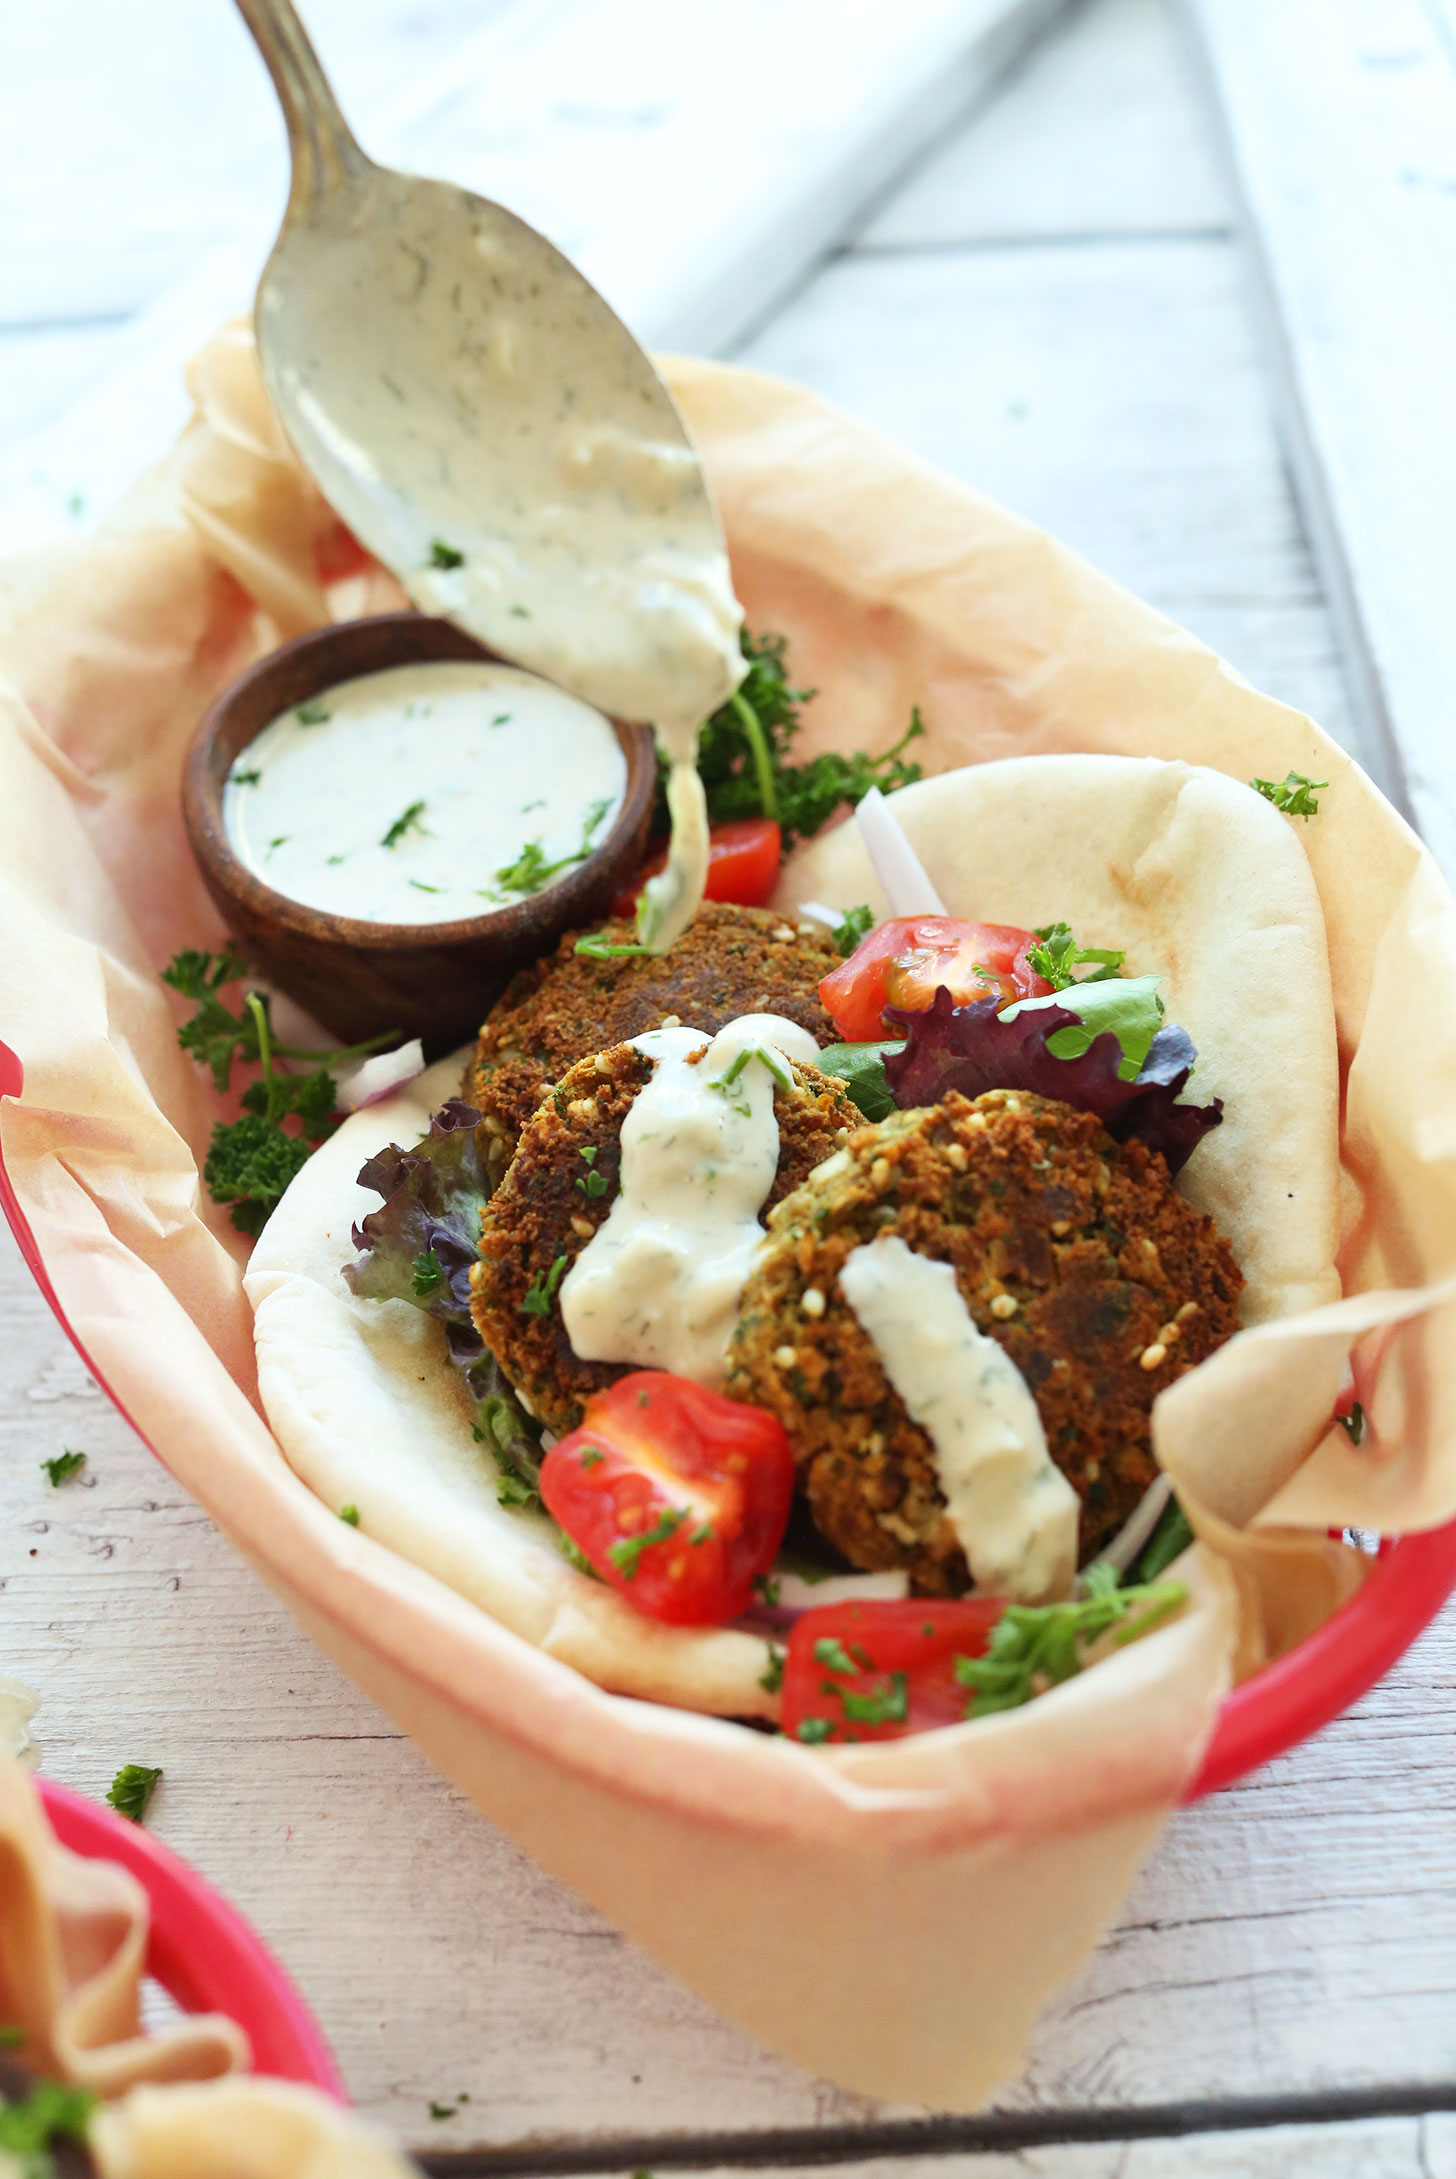 Pouring delicious vegan Mediterranean-style dressing over falafel